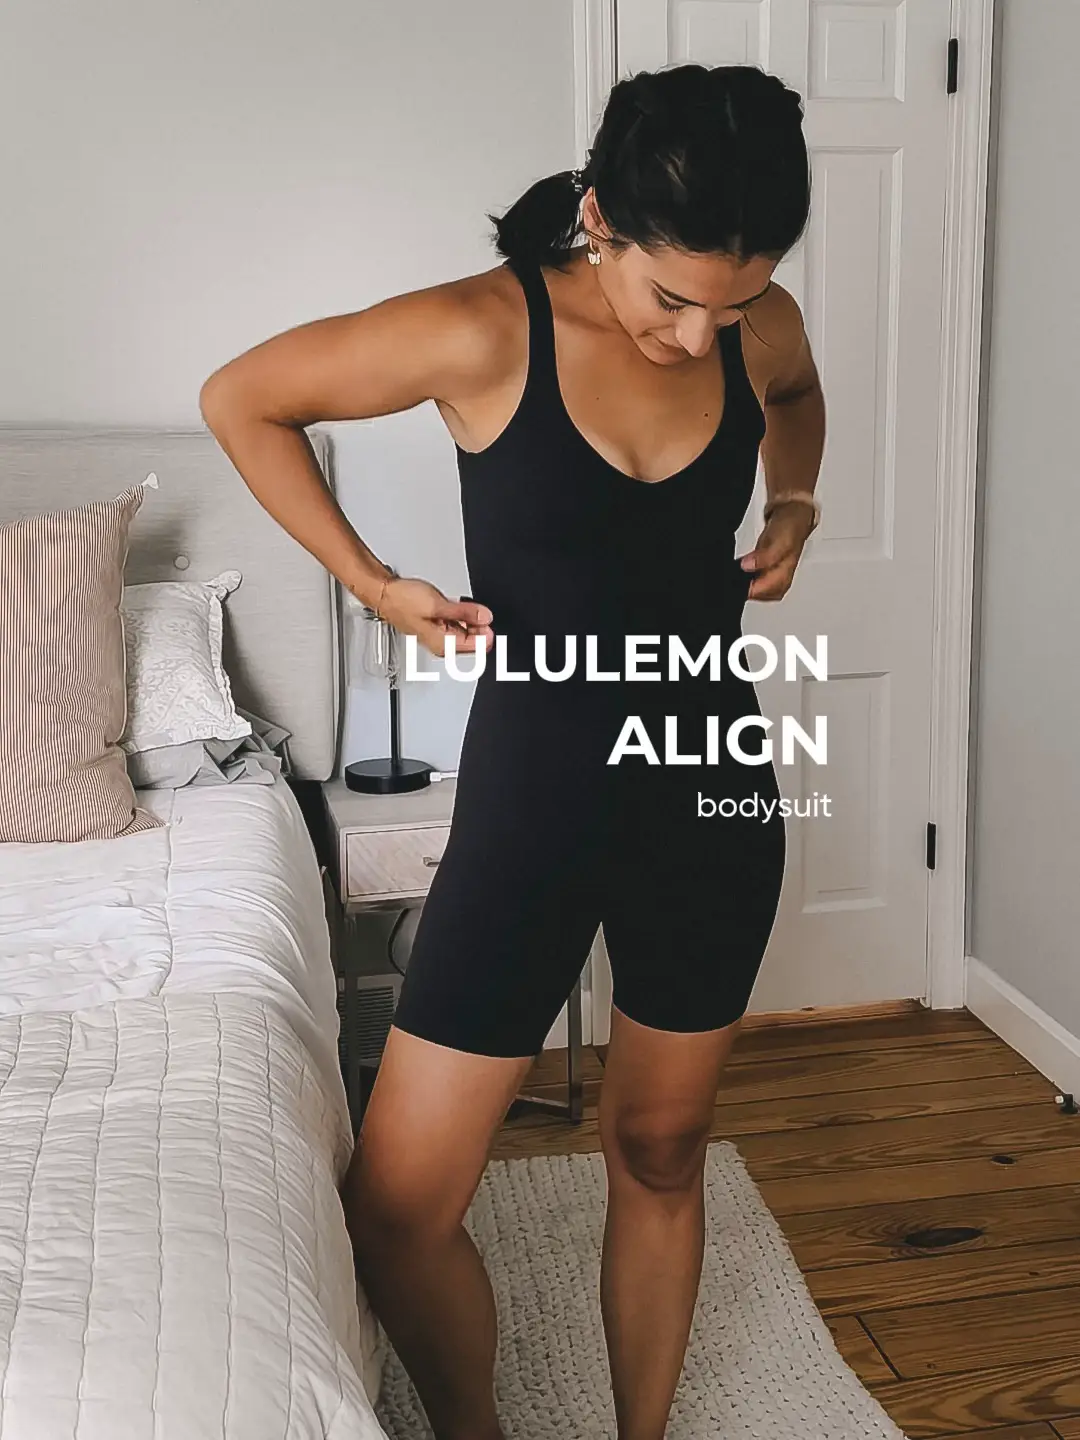 LULULEMON Align Bodysuit, Gallery posted by Michelle Quinn